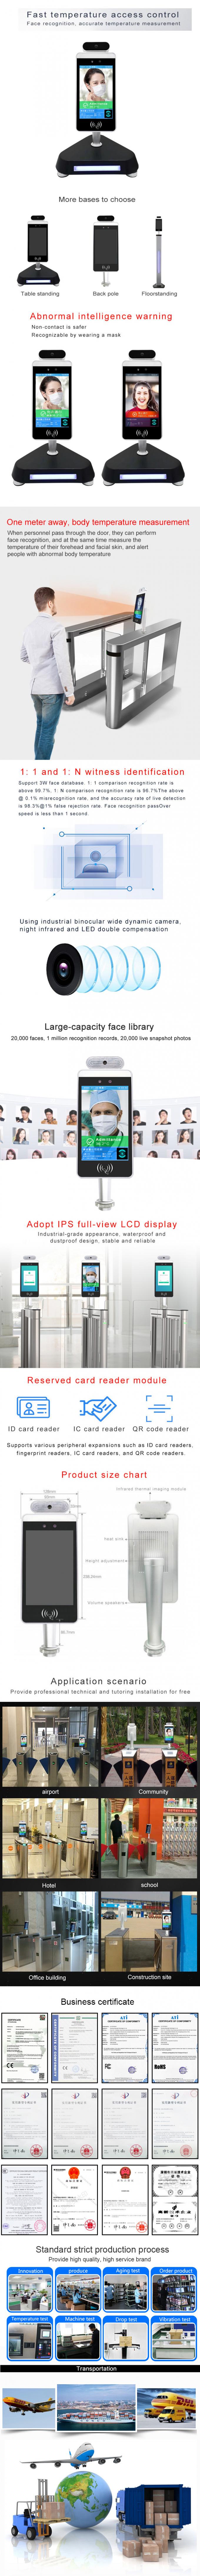 High Performance Wall Mount LCD Display 1280 * 800 Resolution IPS Panel 0